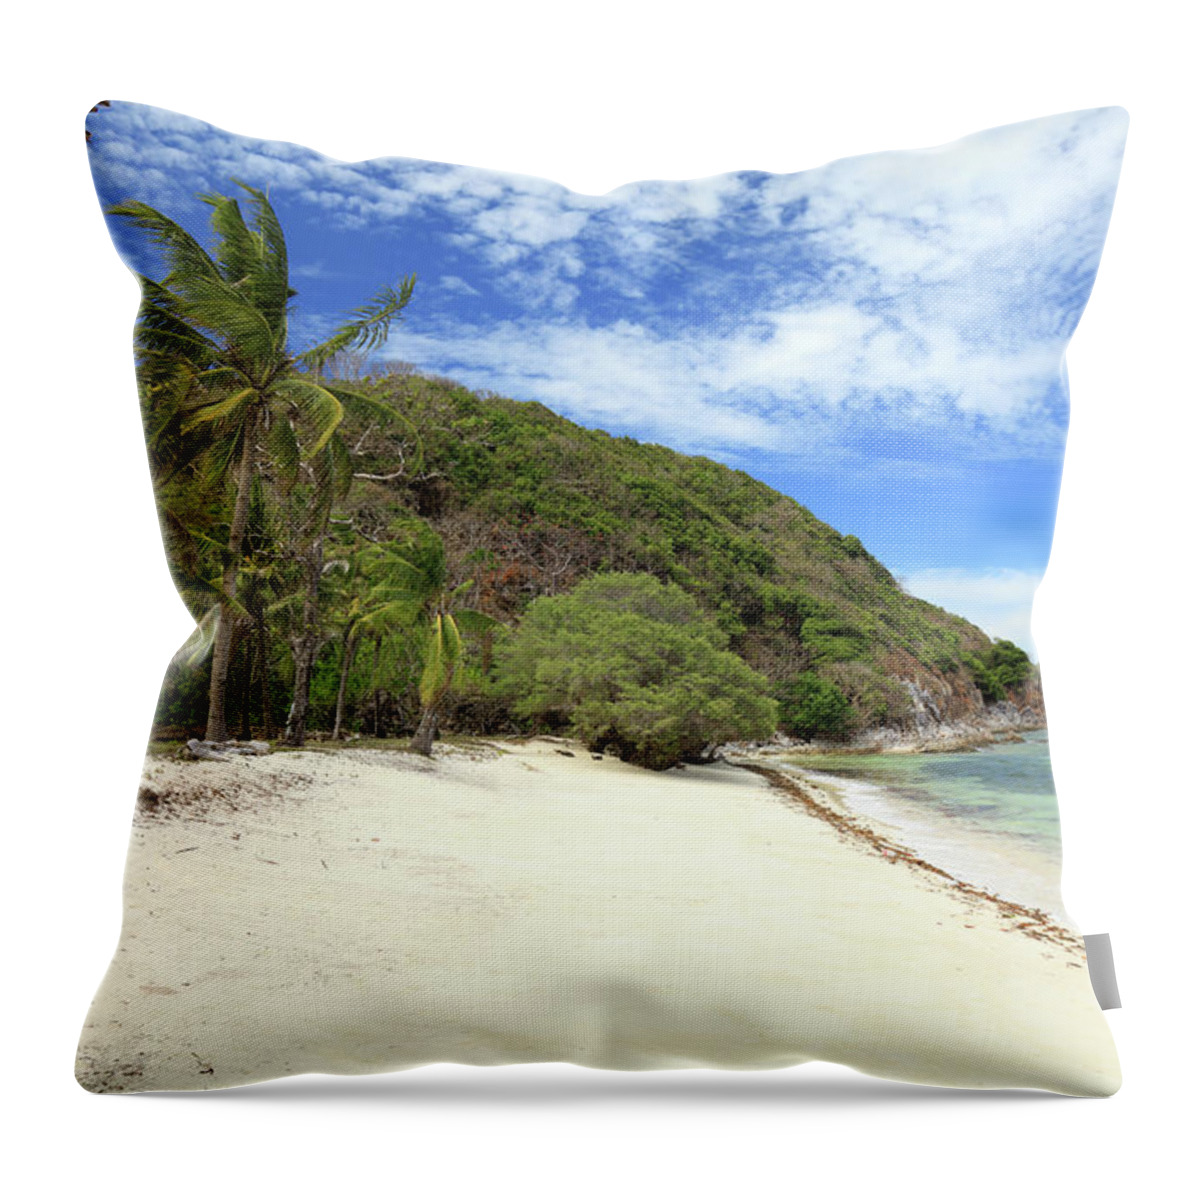 Scenics Throw Pillow featuring the photograph Malcapuya Island Beach by Vuk8691